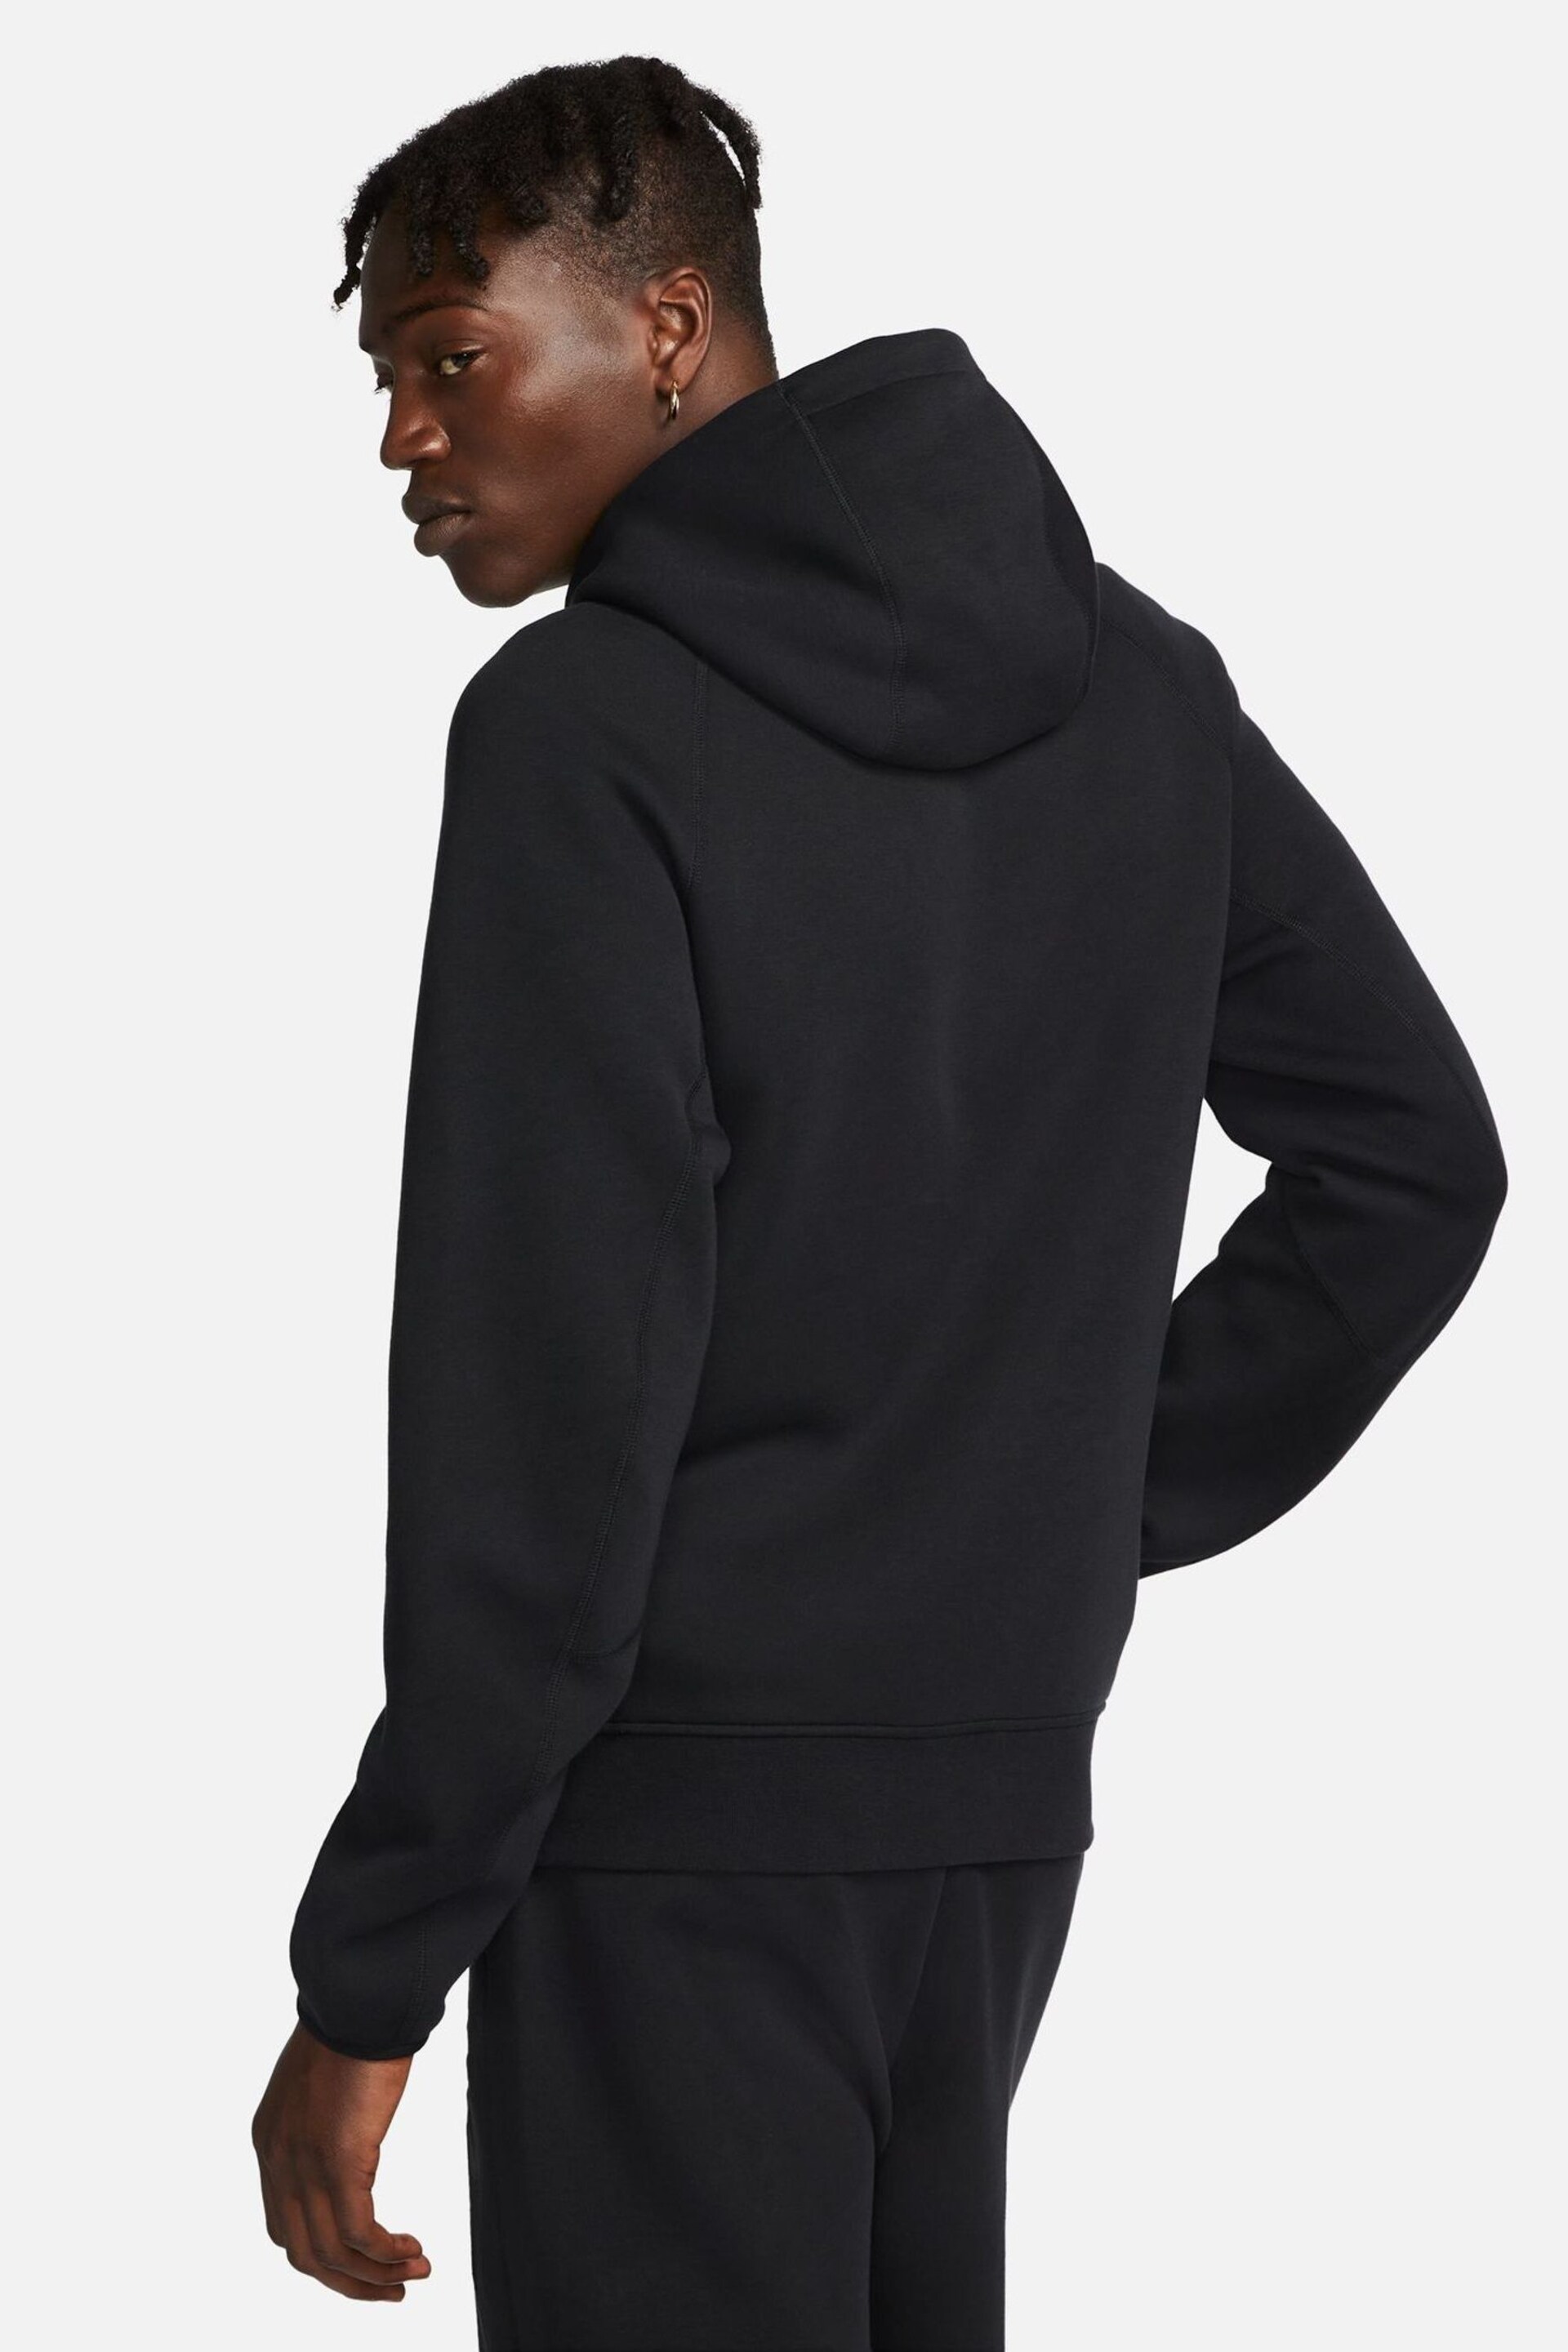 Nike Black Tech Fleece Pullover Hoodie - Image 2 of 16